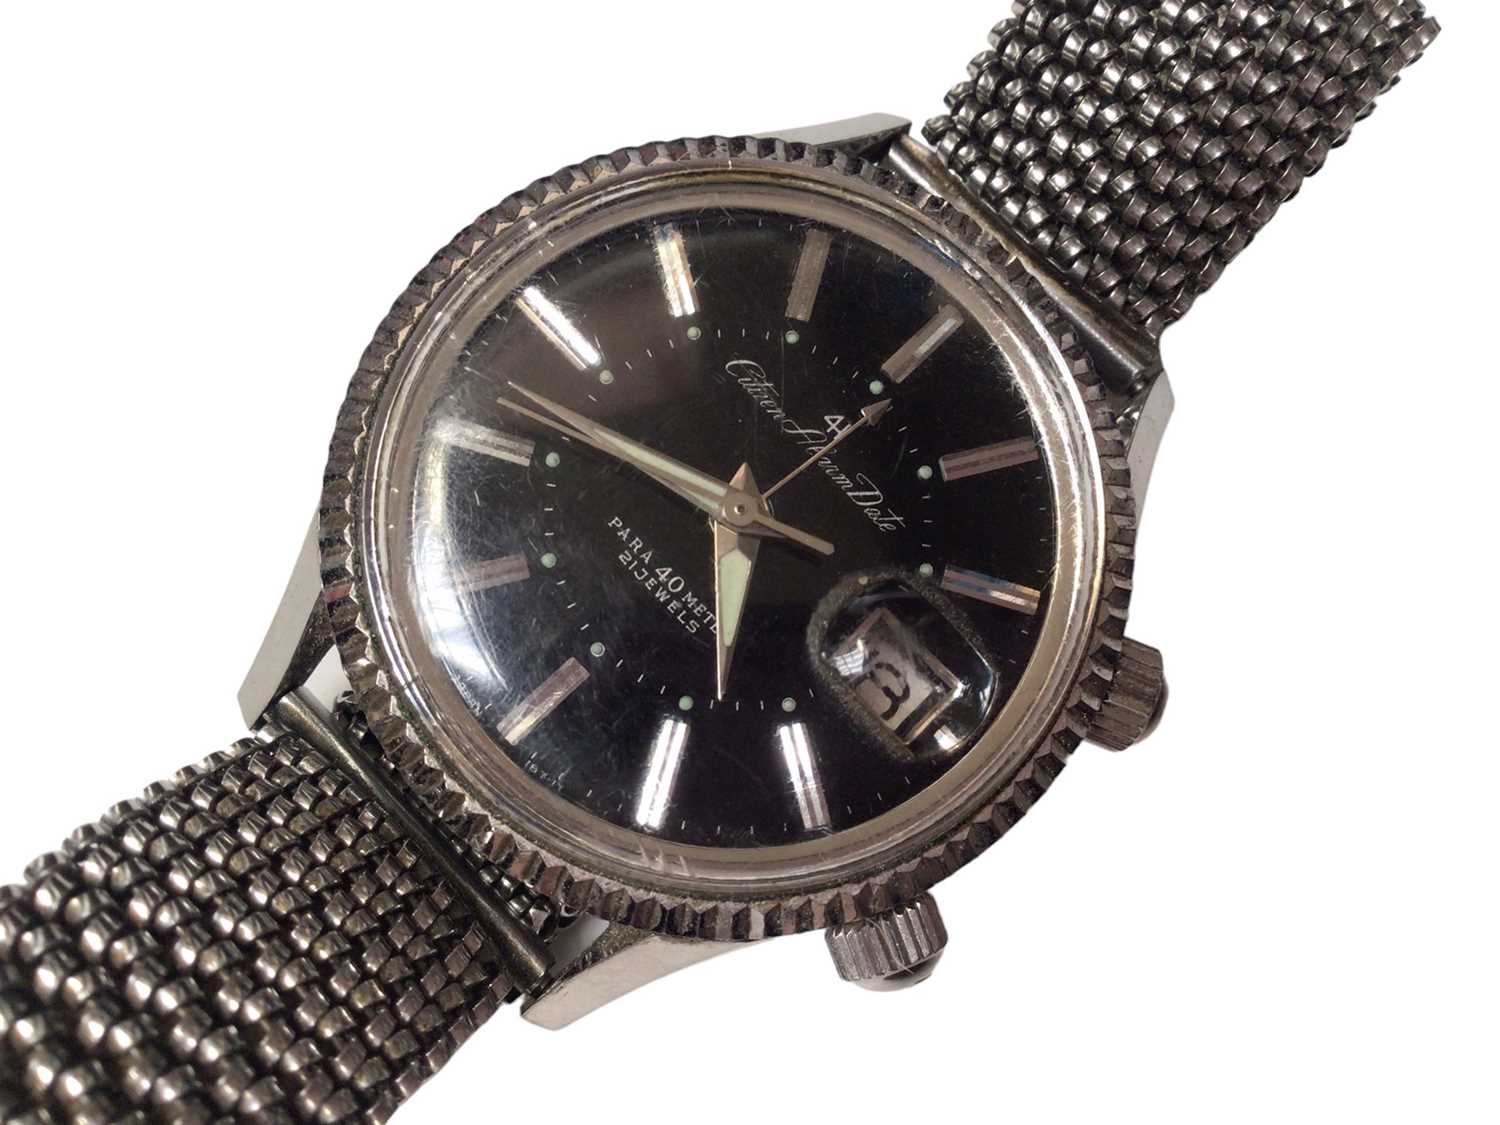 Gentlemen's Citizen Alarm Date stainless steel wristwatch - Image 3 of 4